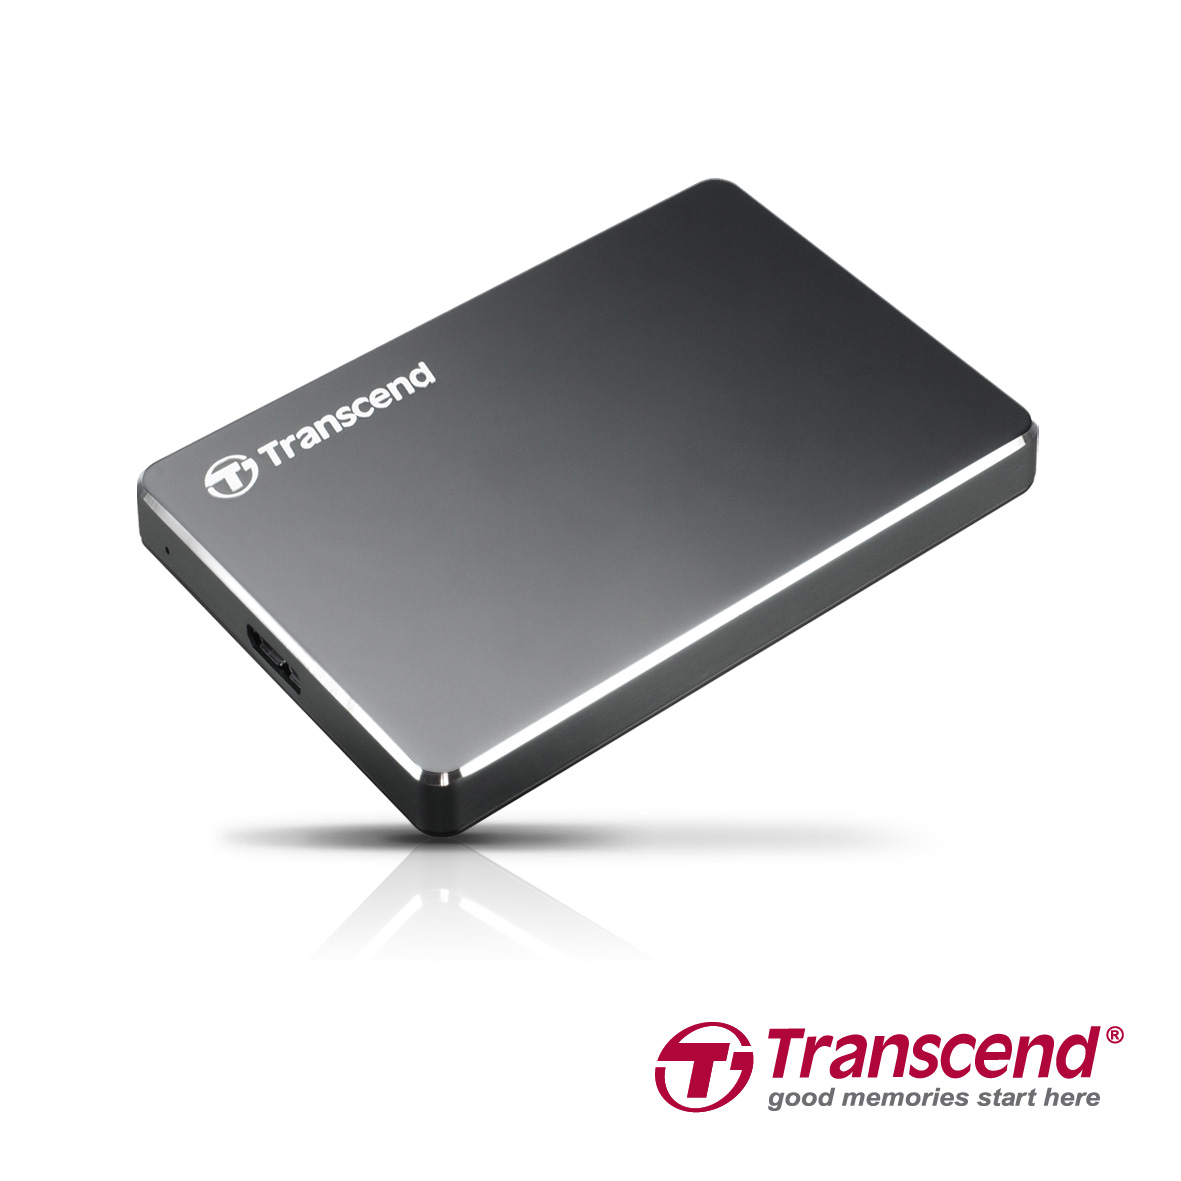 Лучший внешний тб. STOREJET 25c3n. HDD Transcend 1 TB. Трансенд внешний жесткий диск 1 ТБ. Внешний HDD Transcend 1 TB м3 серо-зелёный, 2.5", USB 3.1.